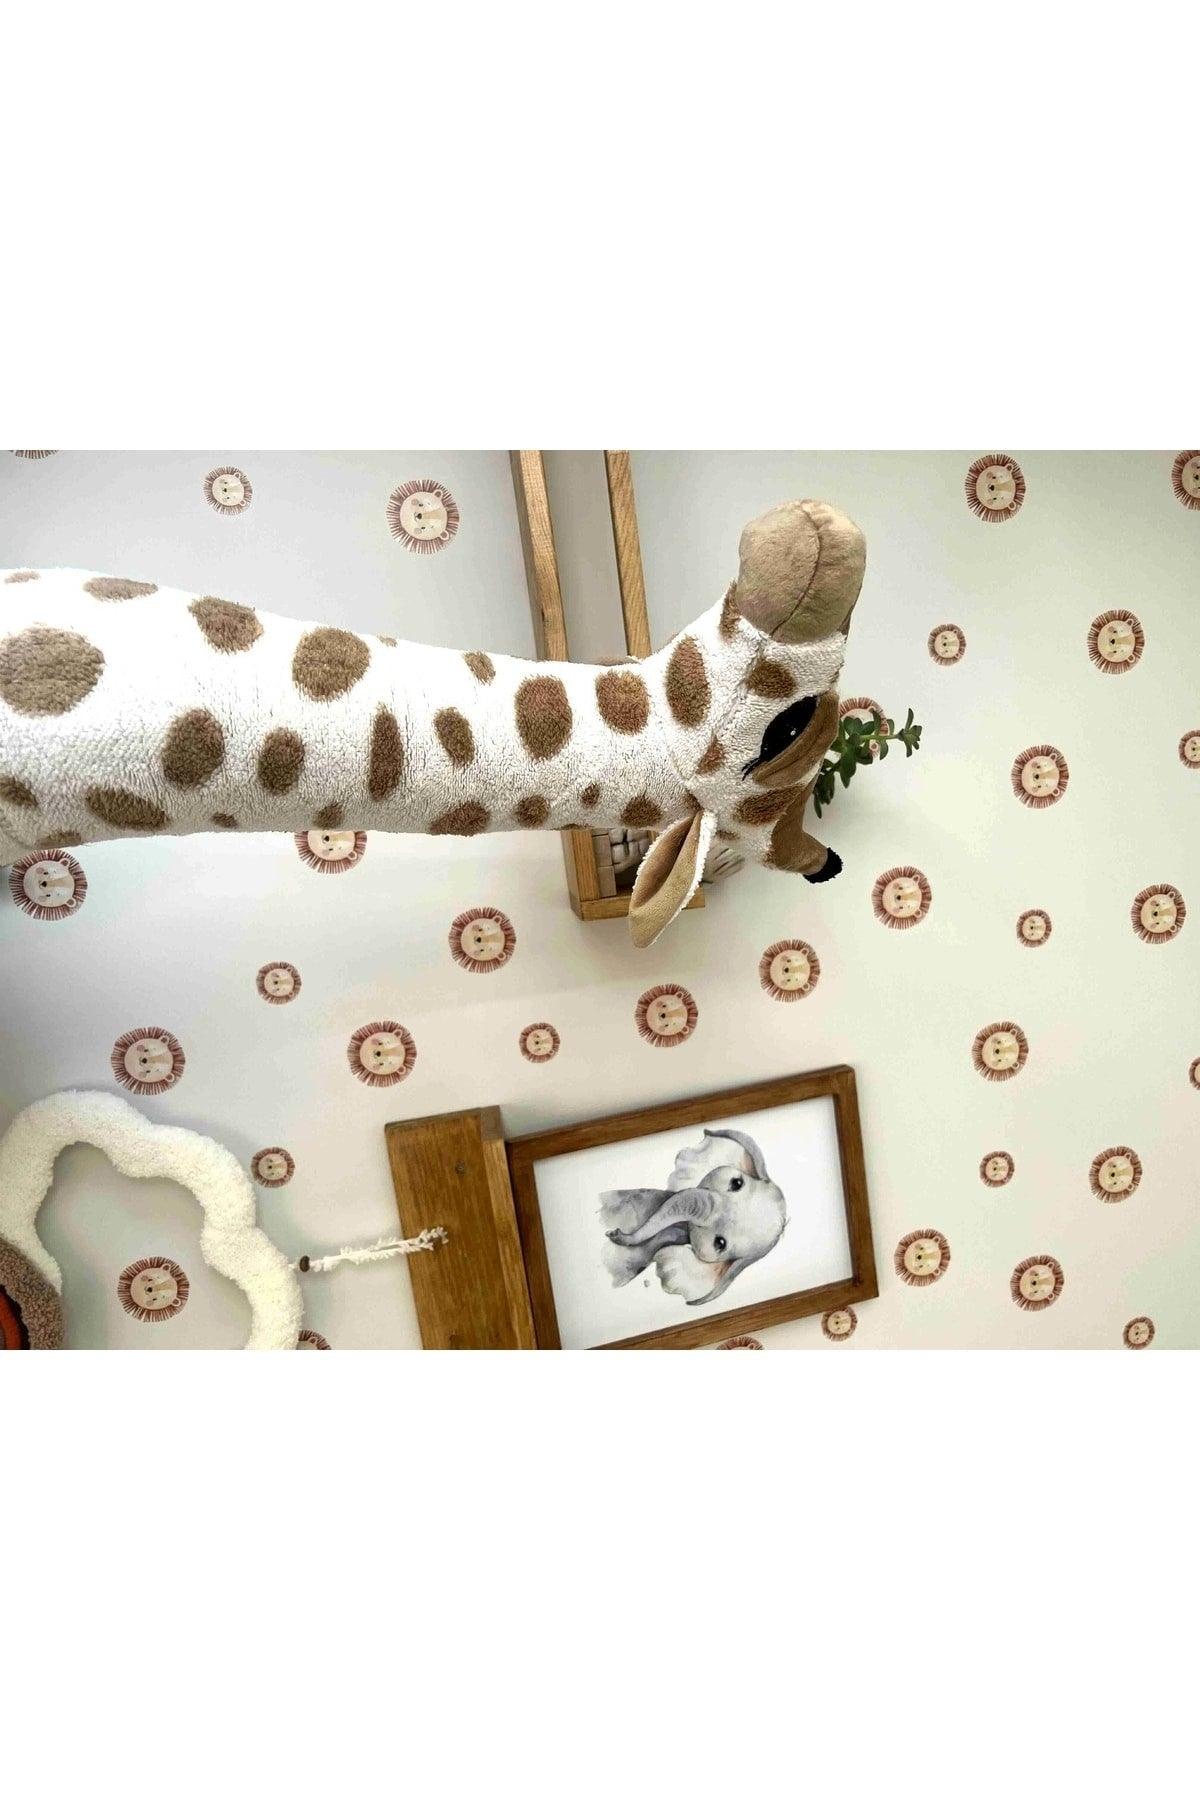 Lion Figured Kids Room Wall Sticker Set 126 Pieces - Swordslife